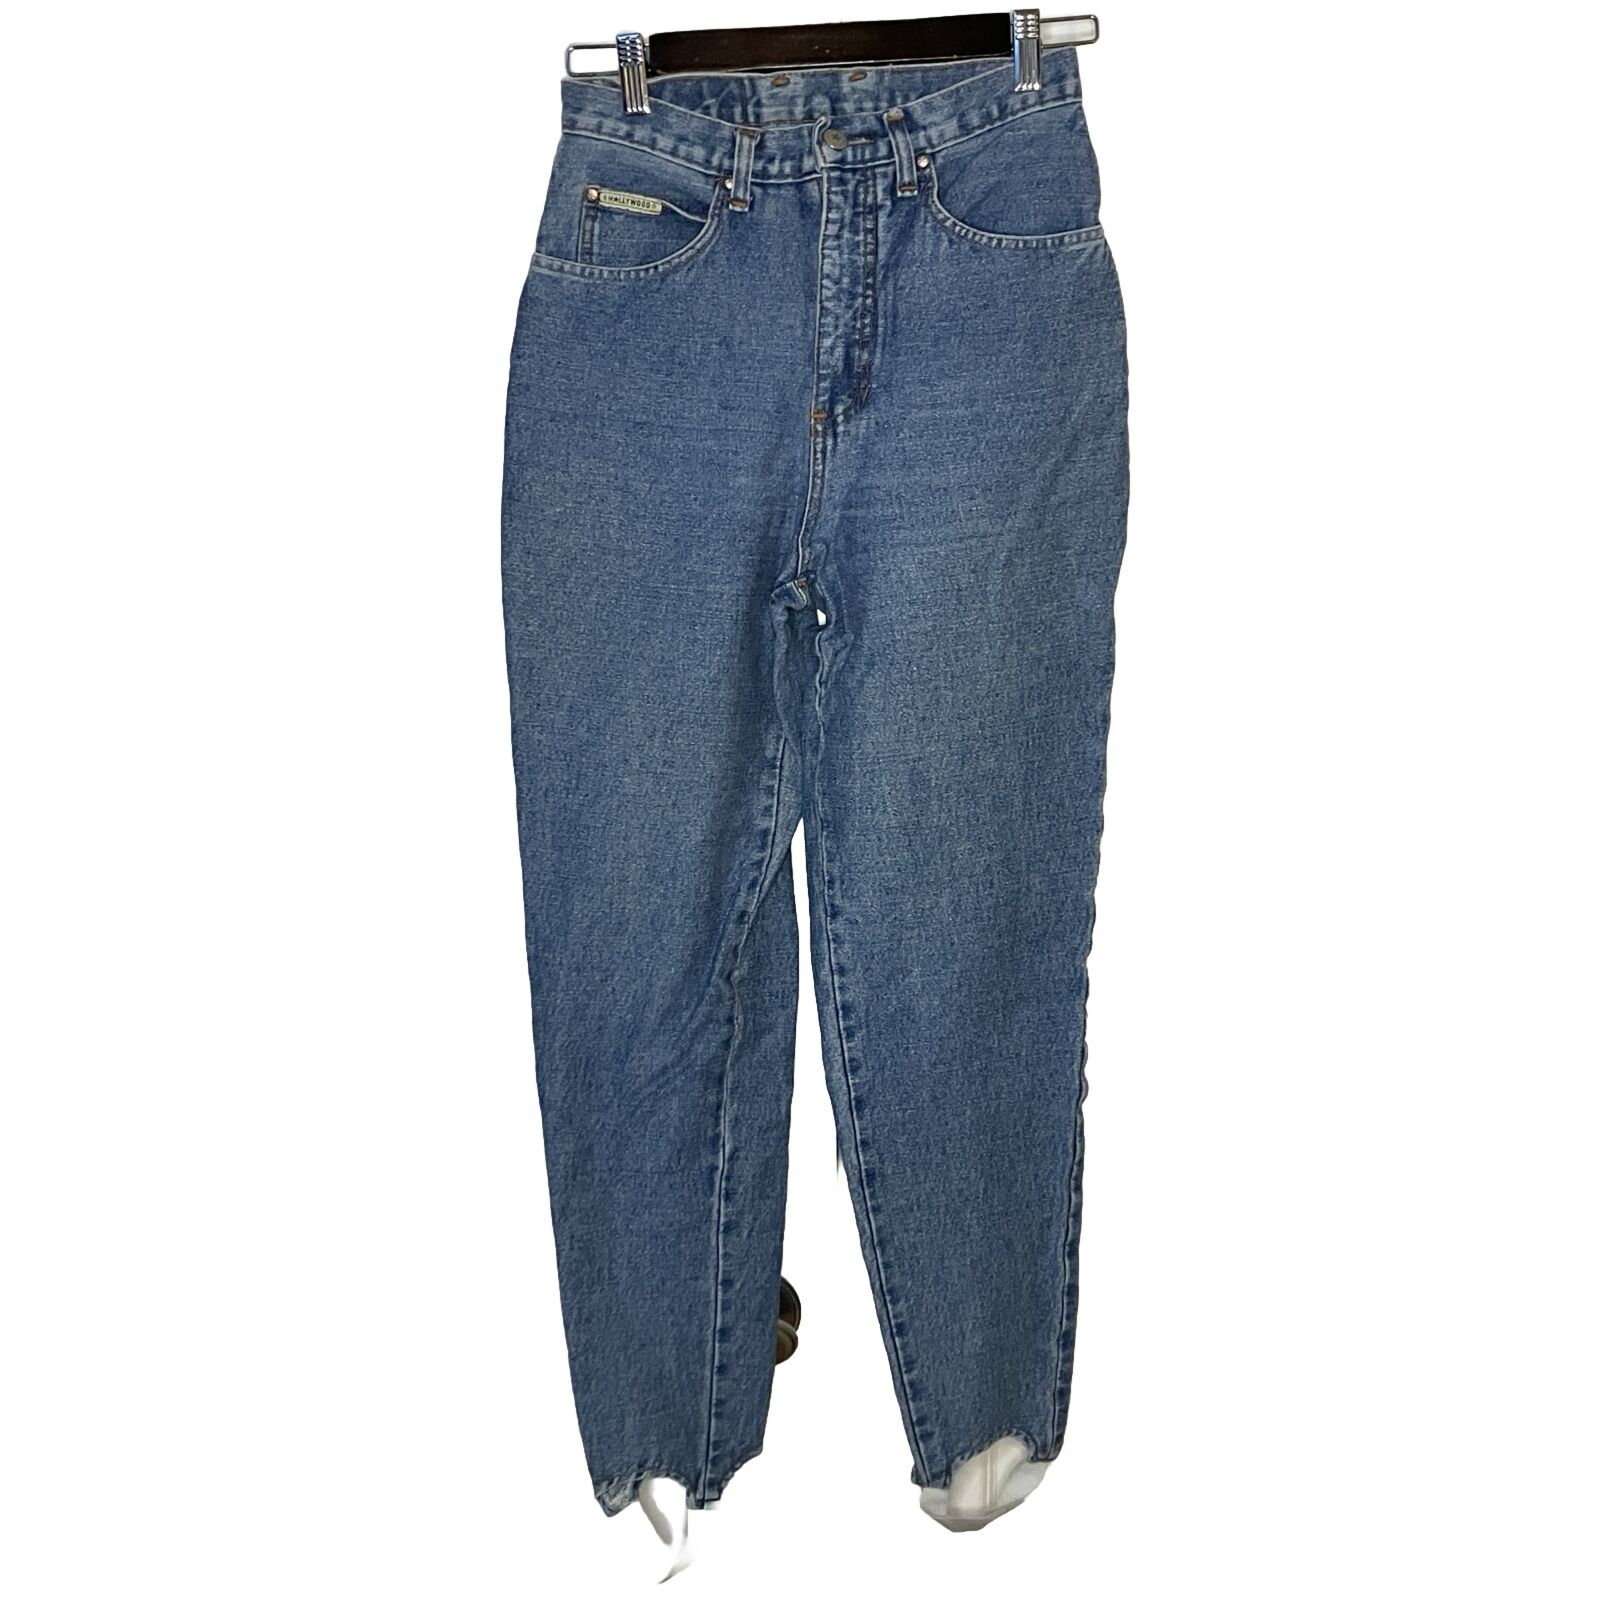 Vintage Hollywood Jeans Light Wash 90s Riding Jea… - image 1